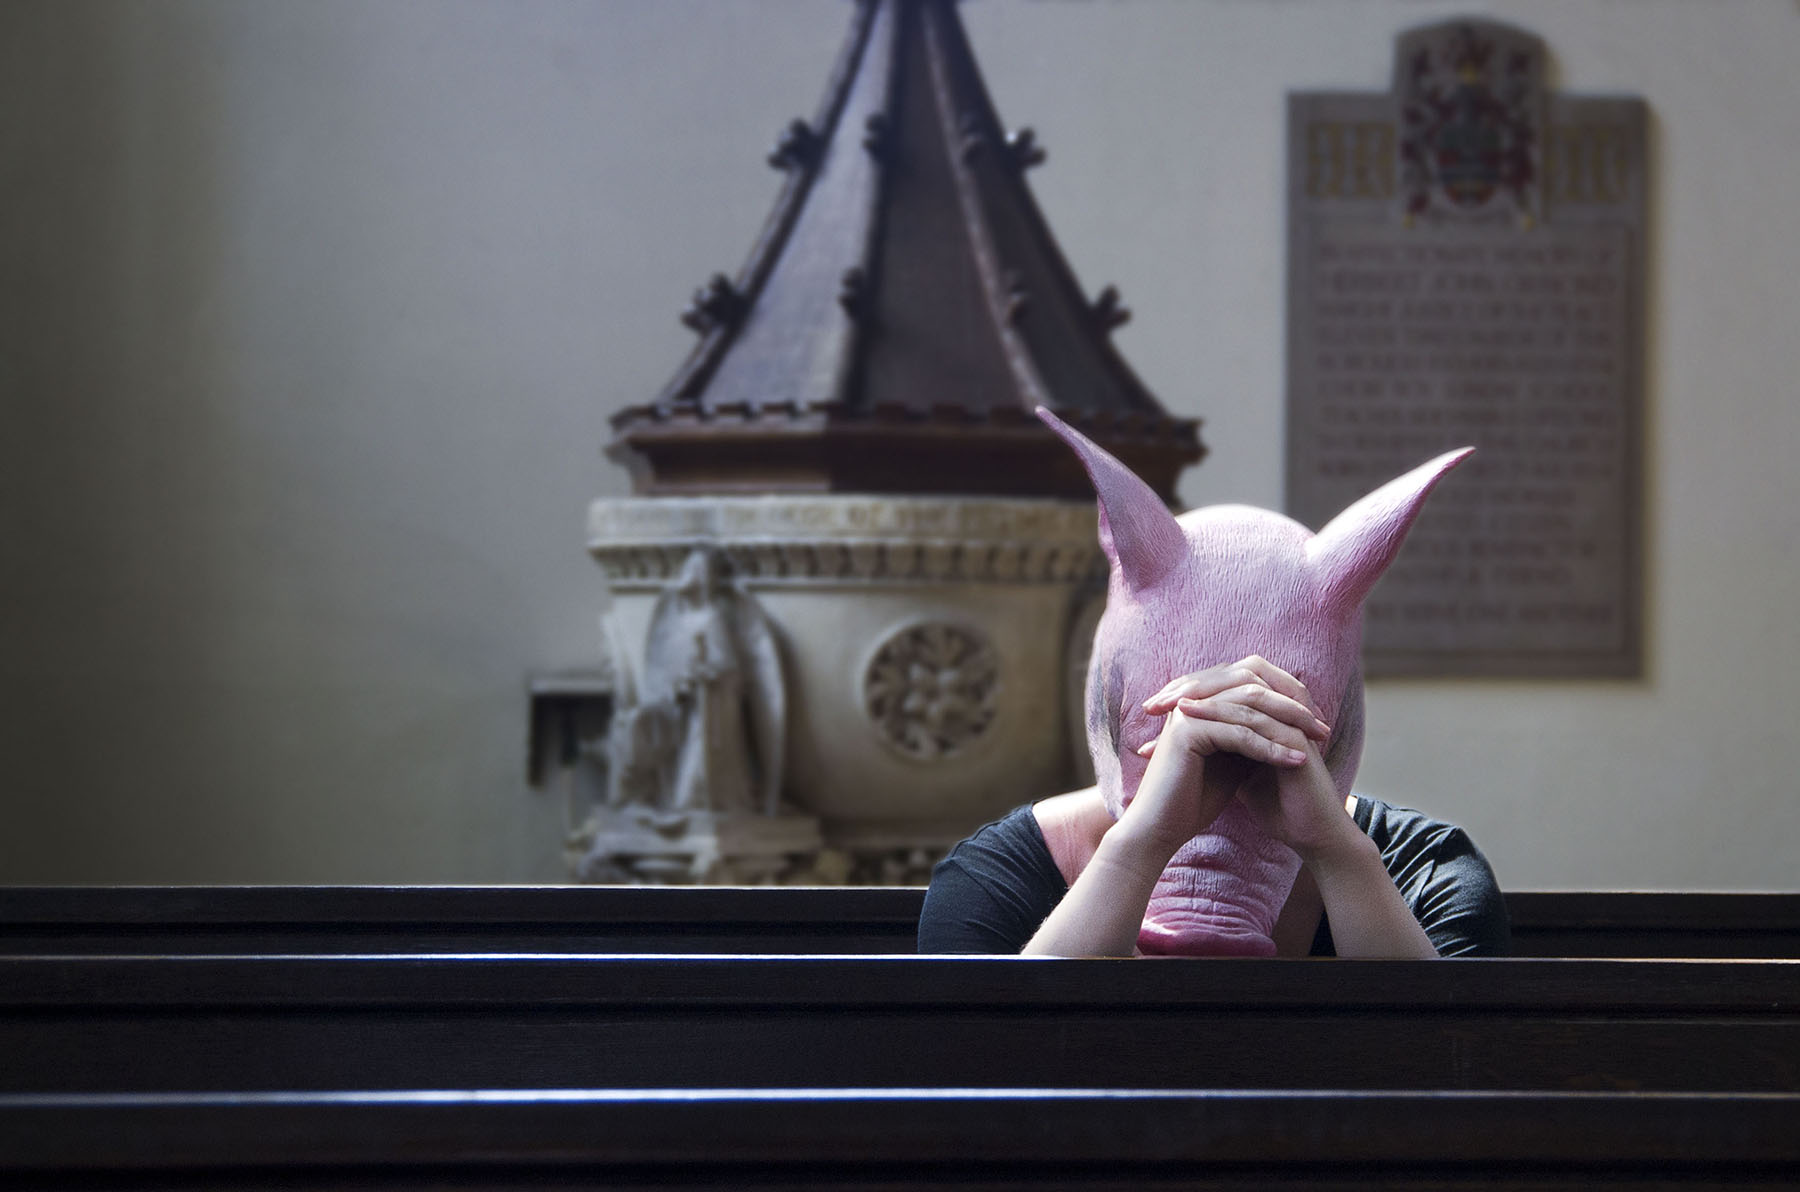 Beast - person wearing pig mask praying in church